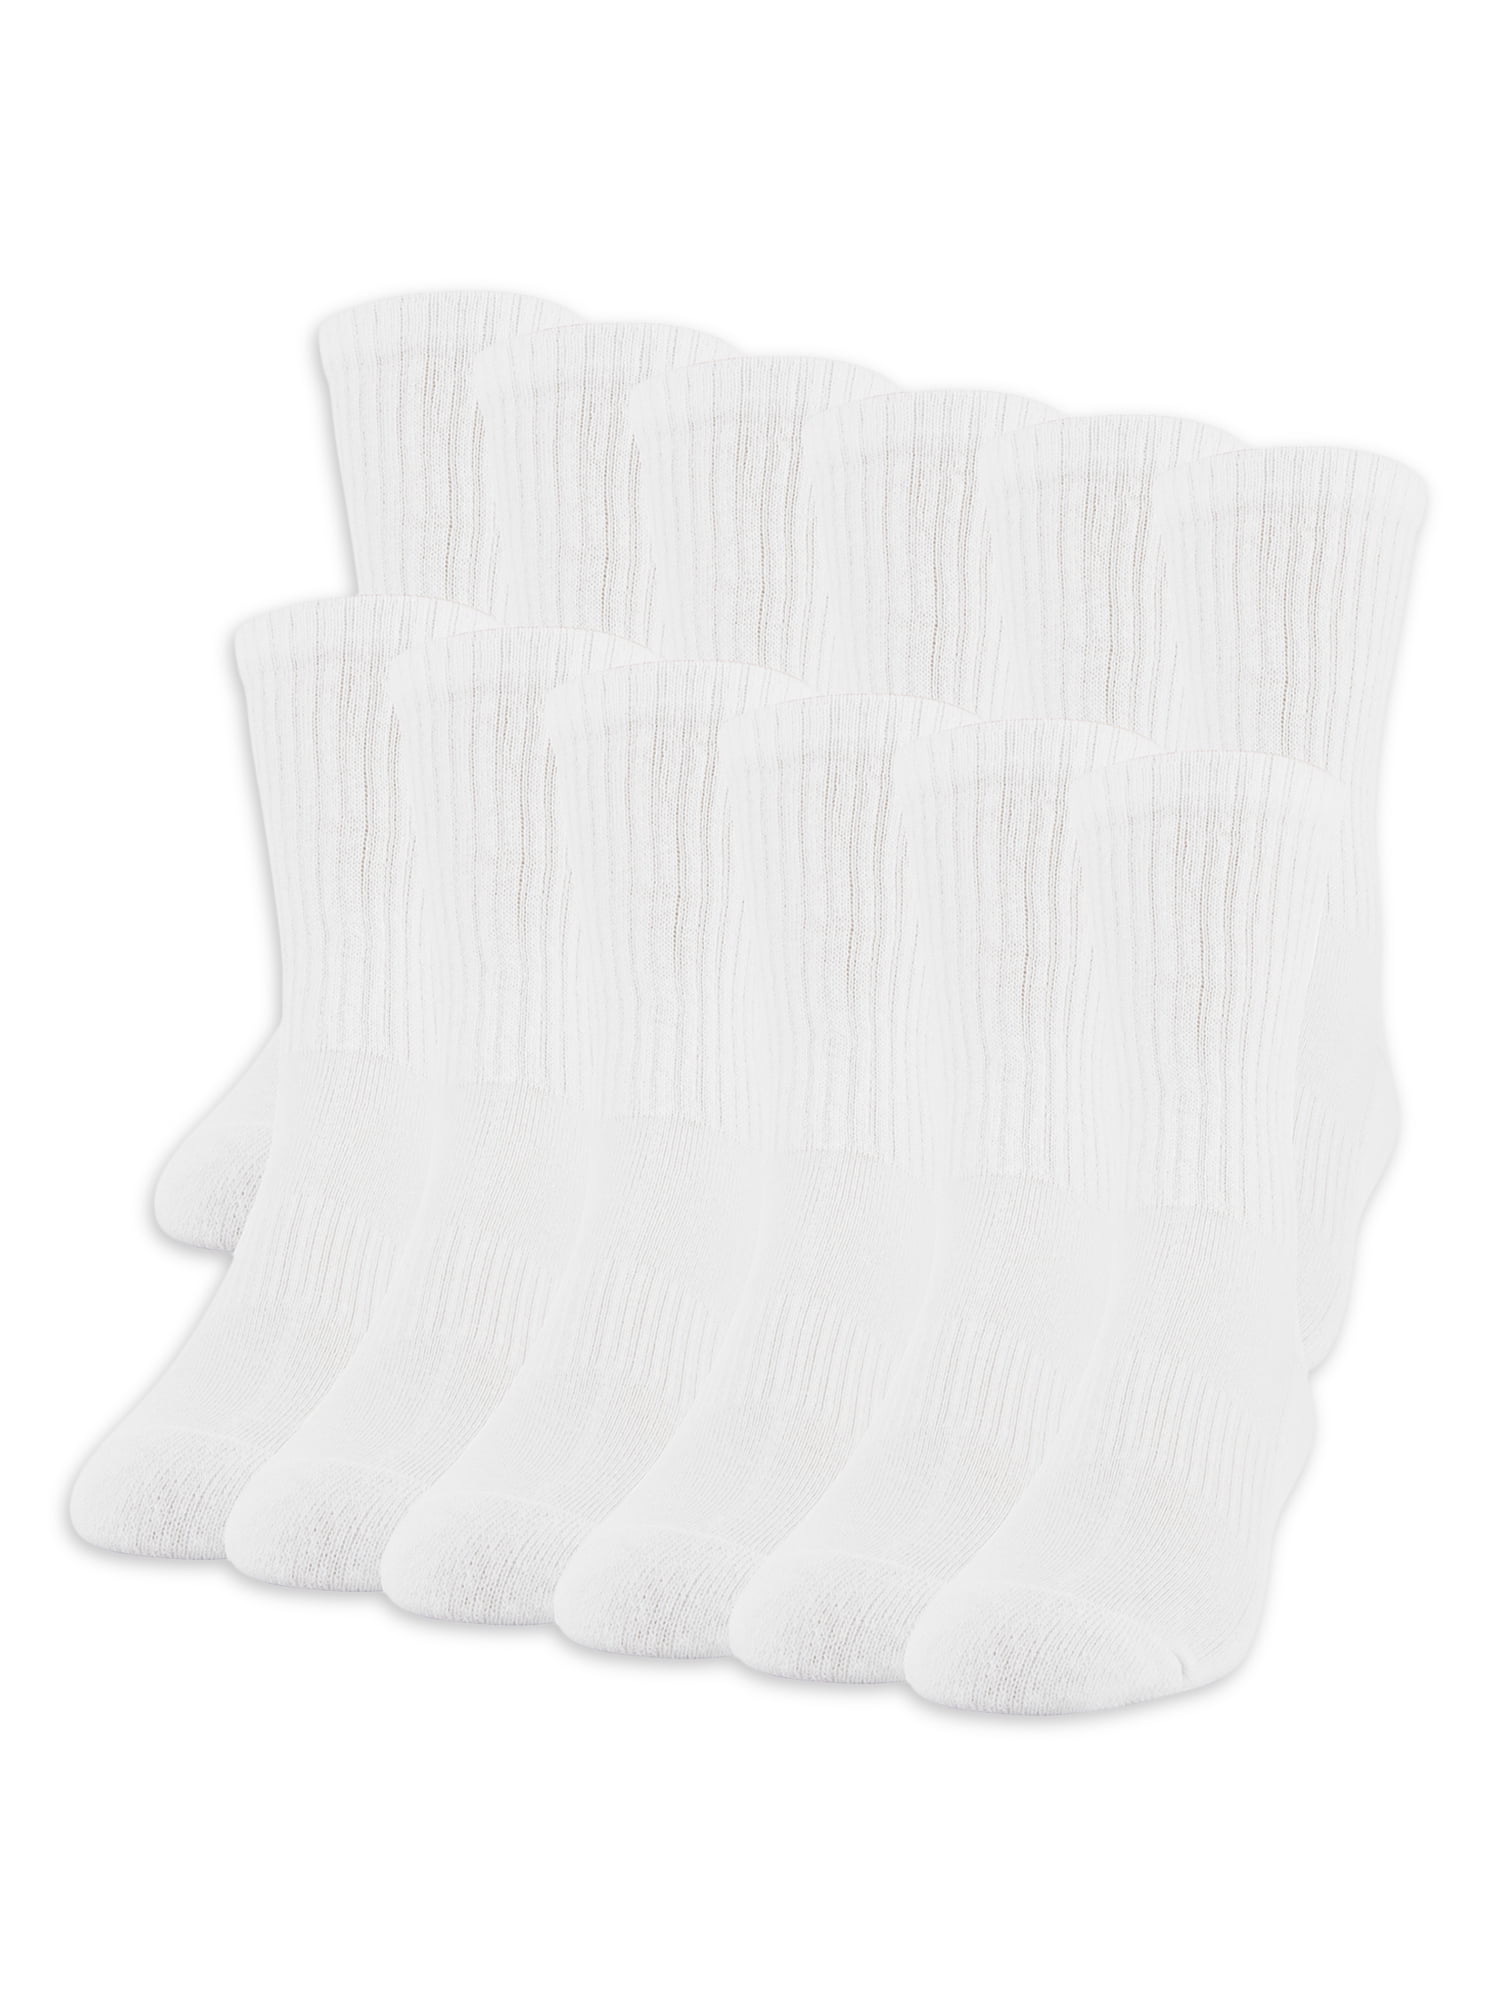 GROOMS SON Childrens Size 9-12 Kids Top Quality Black Cotton Wedding Socks 